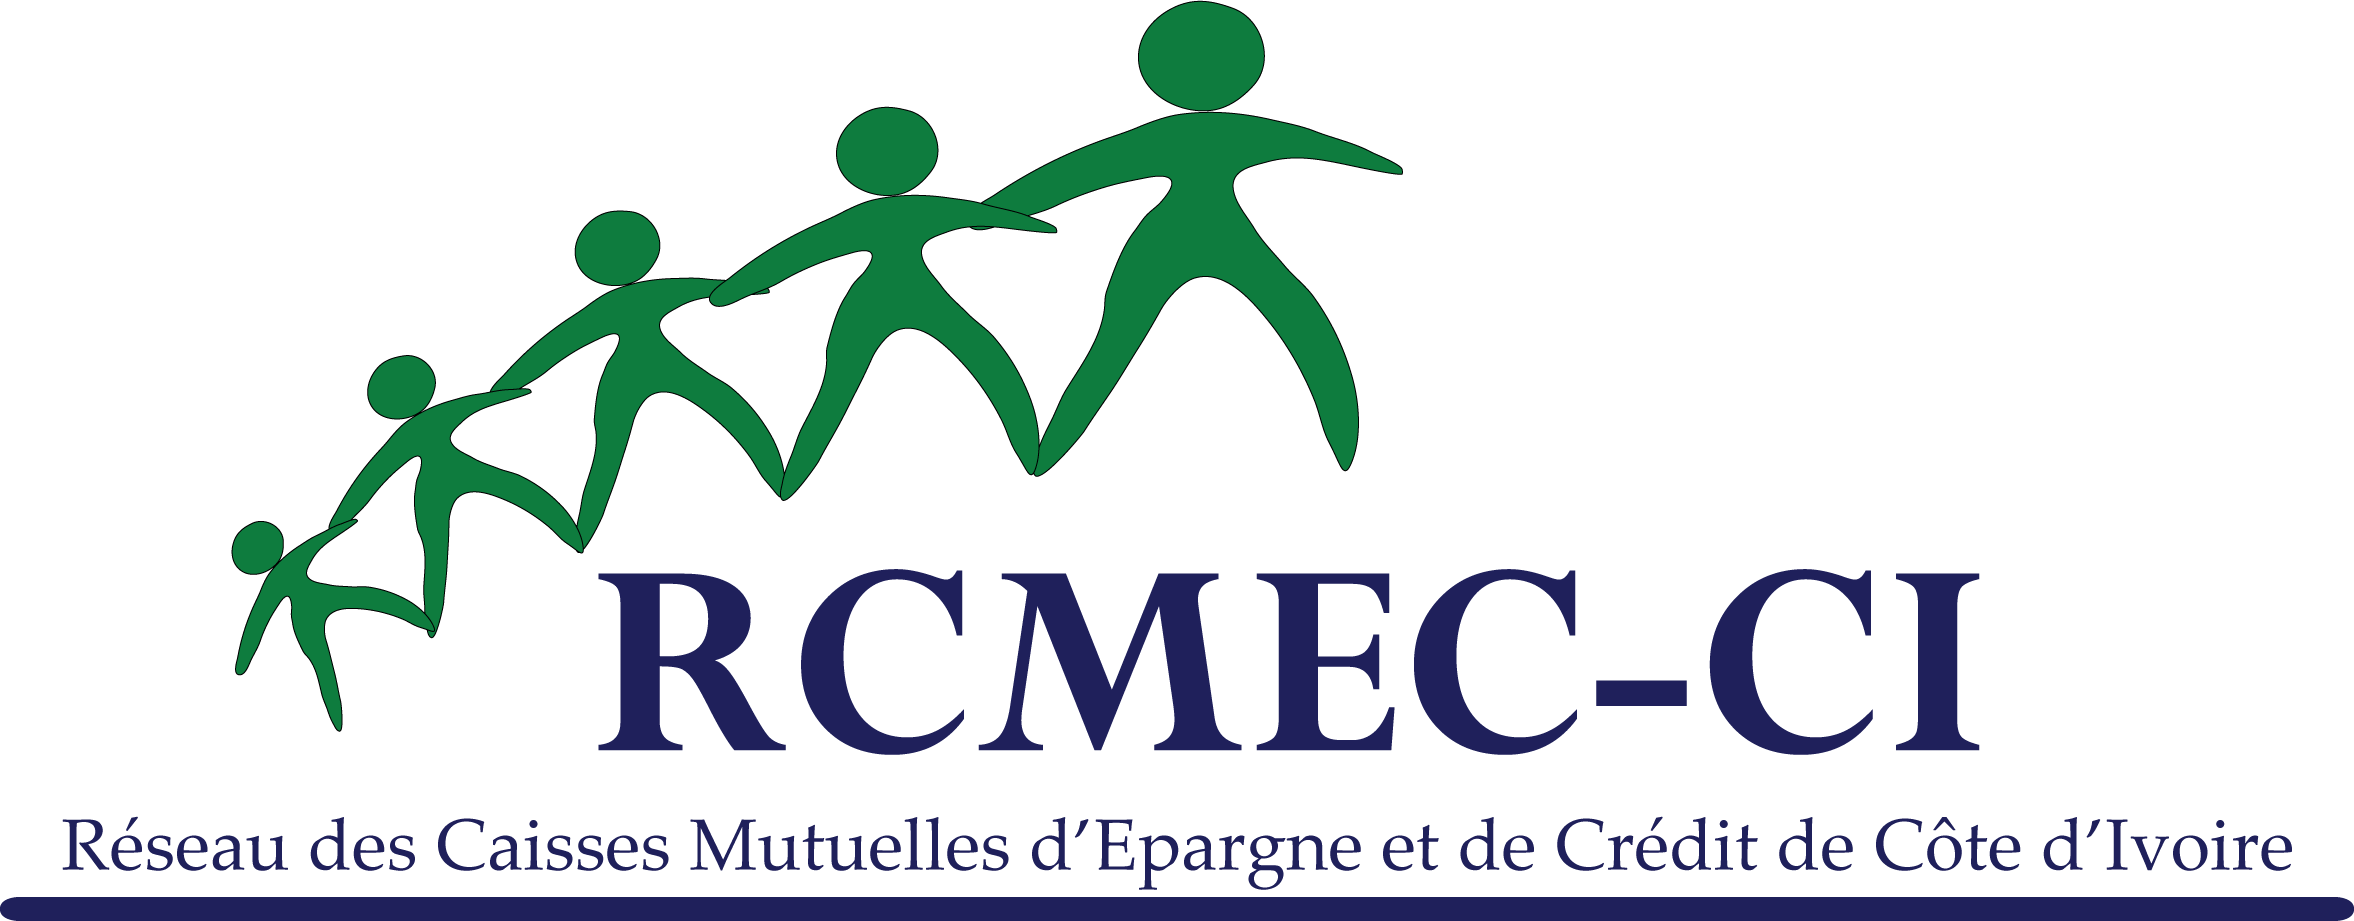 RCMEC-CI Logo